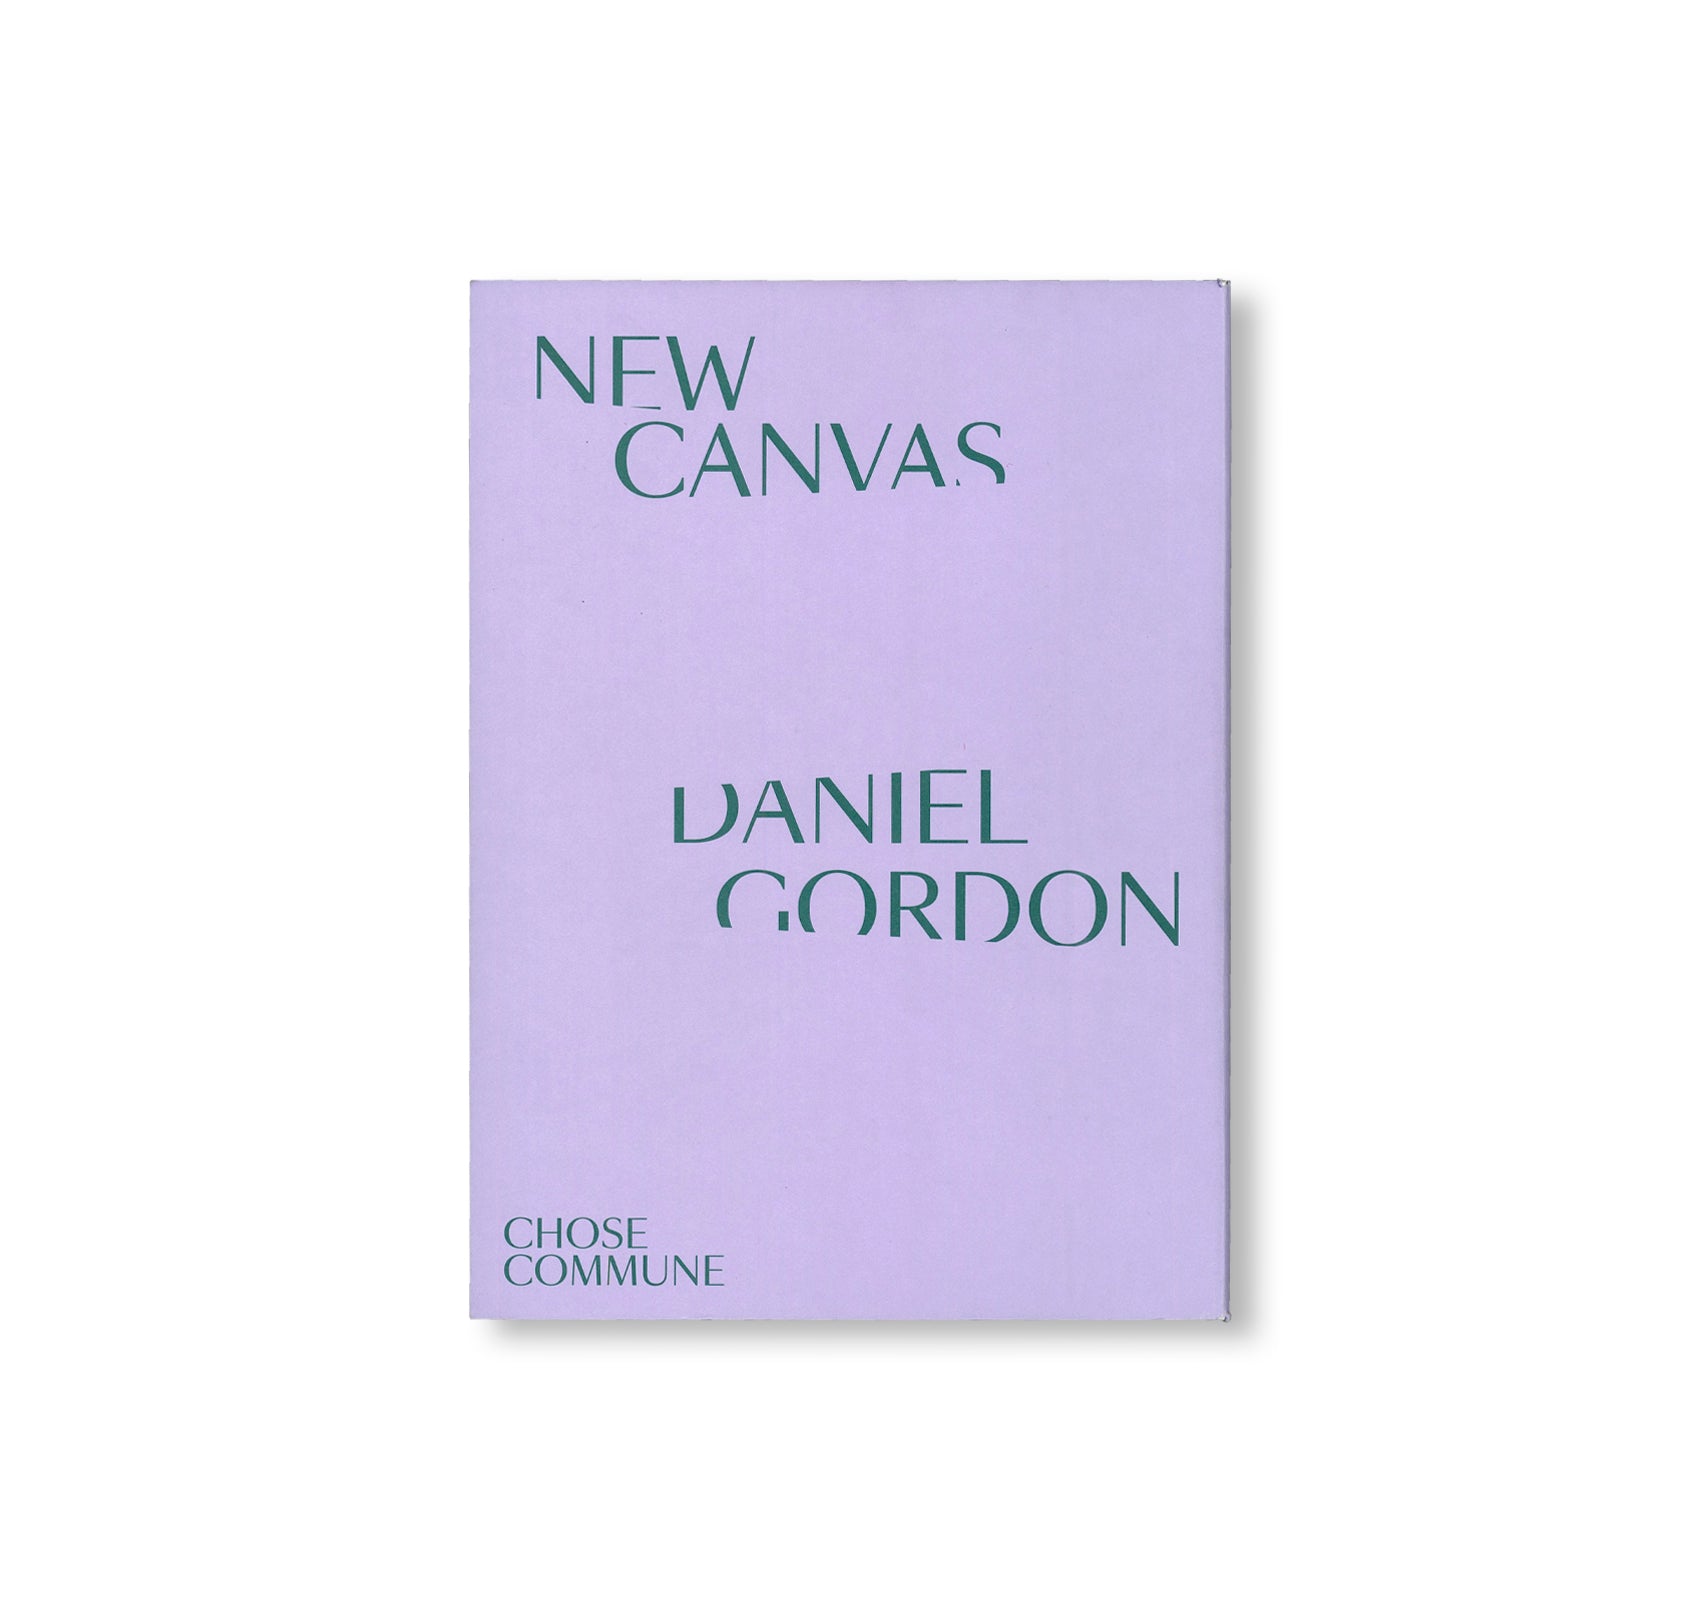 NEW CANVAS by Daniel Gordon